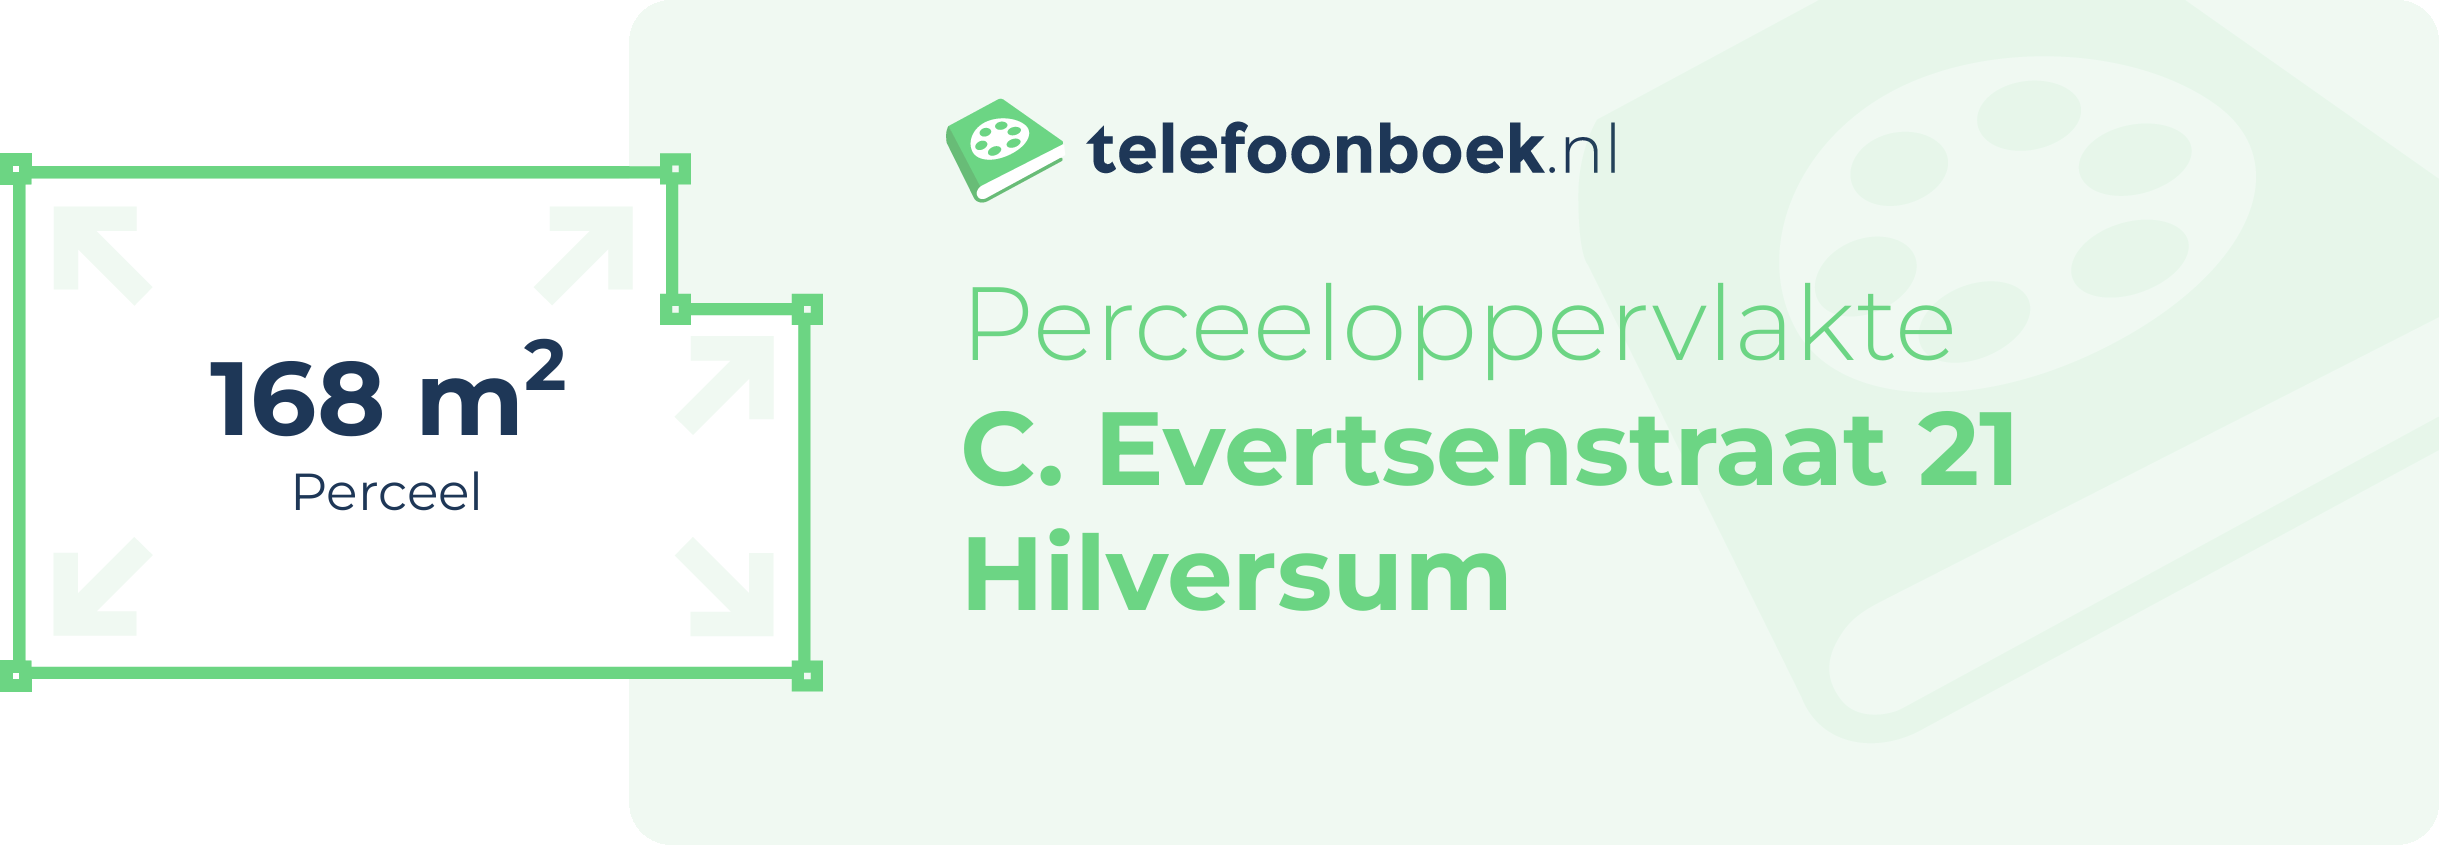 Perceeloppervlakte C. Evertsenstraat 21 Hilversum